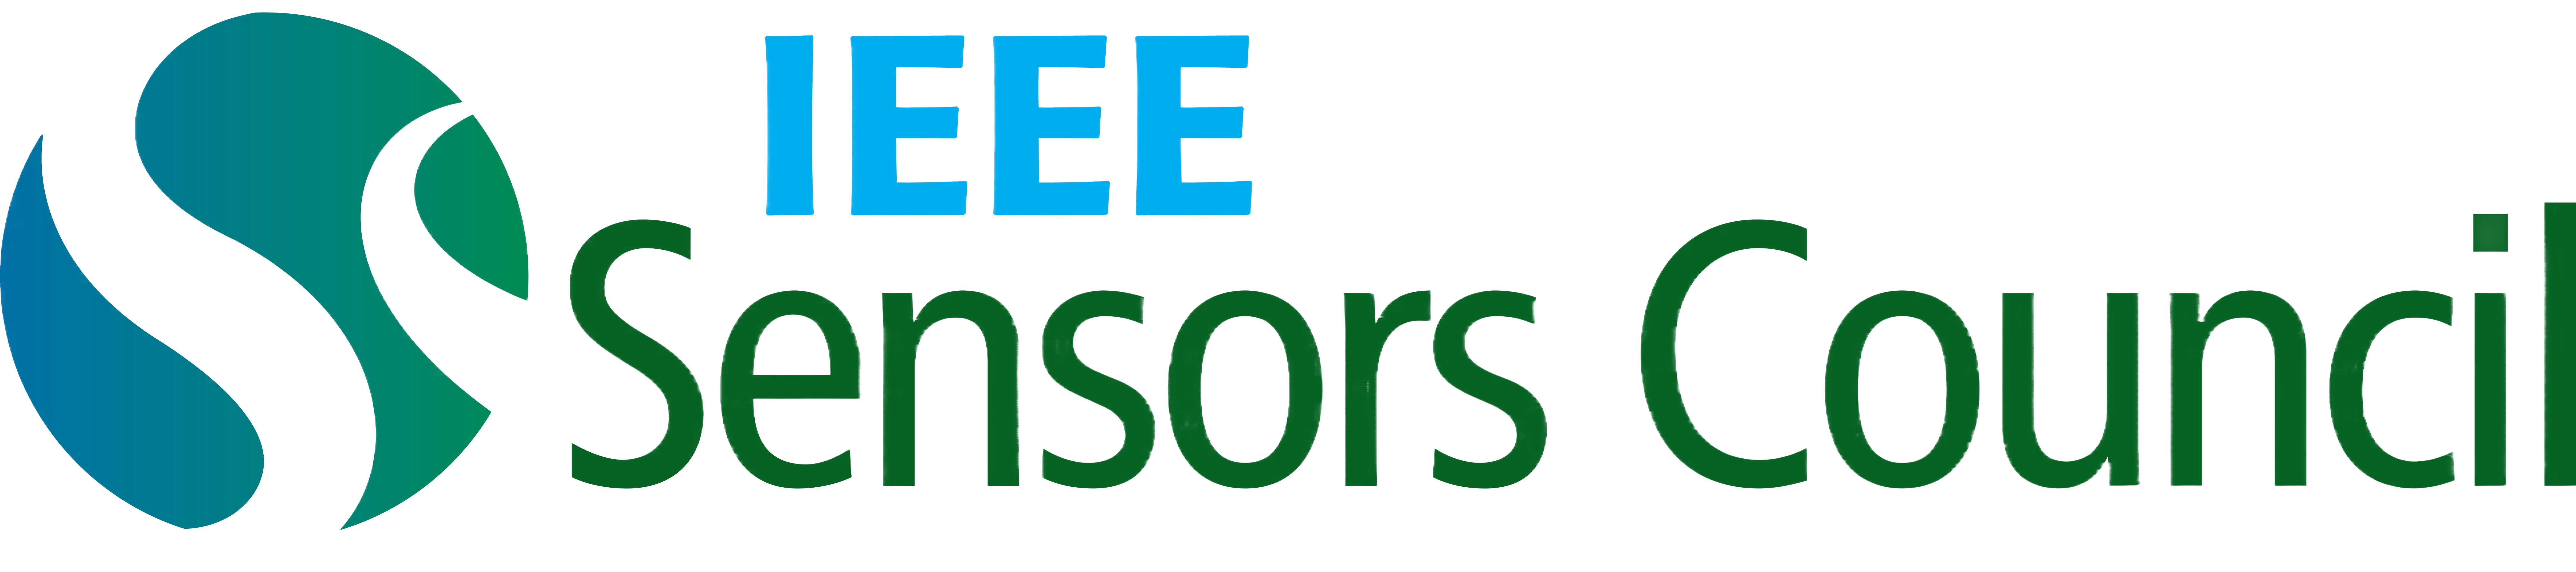 IEEE sensors council-透明logo 8639-1918.png